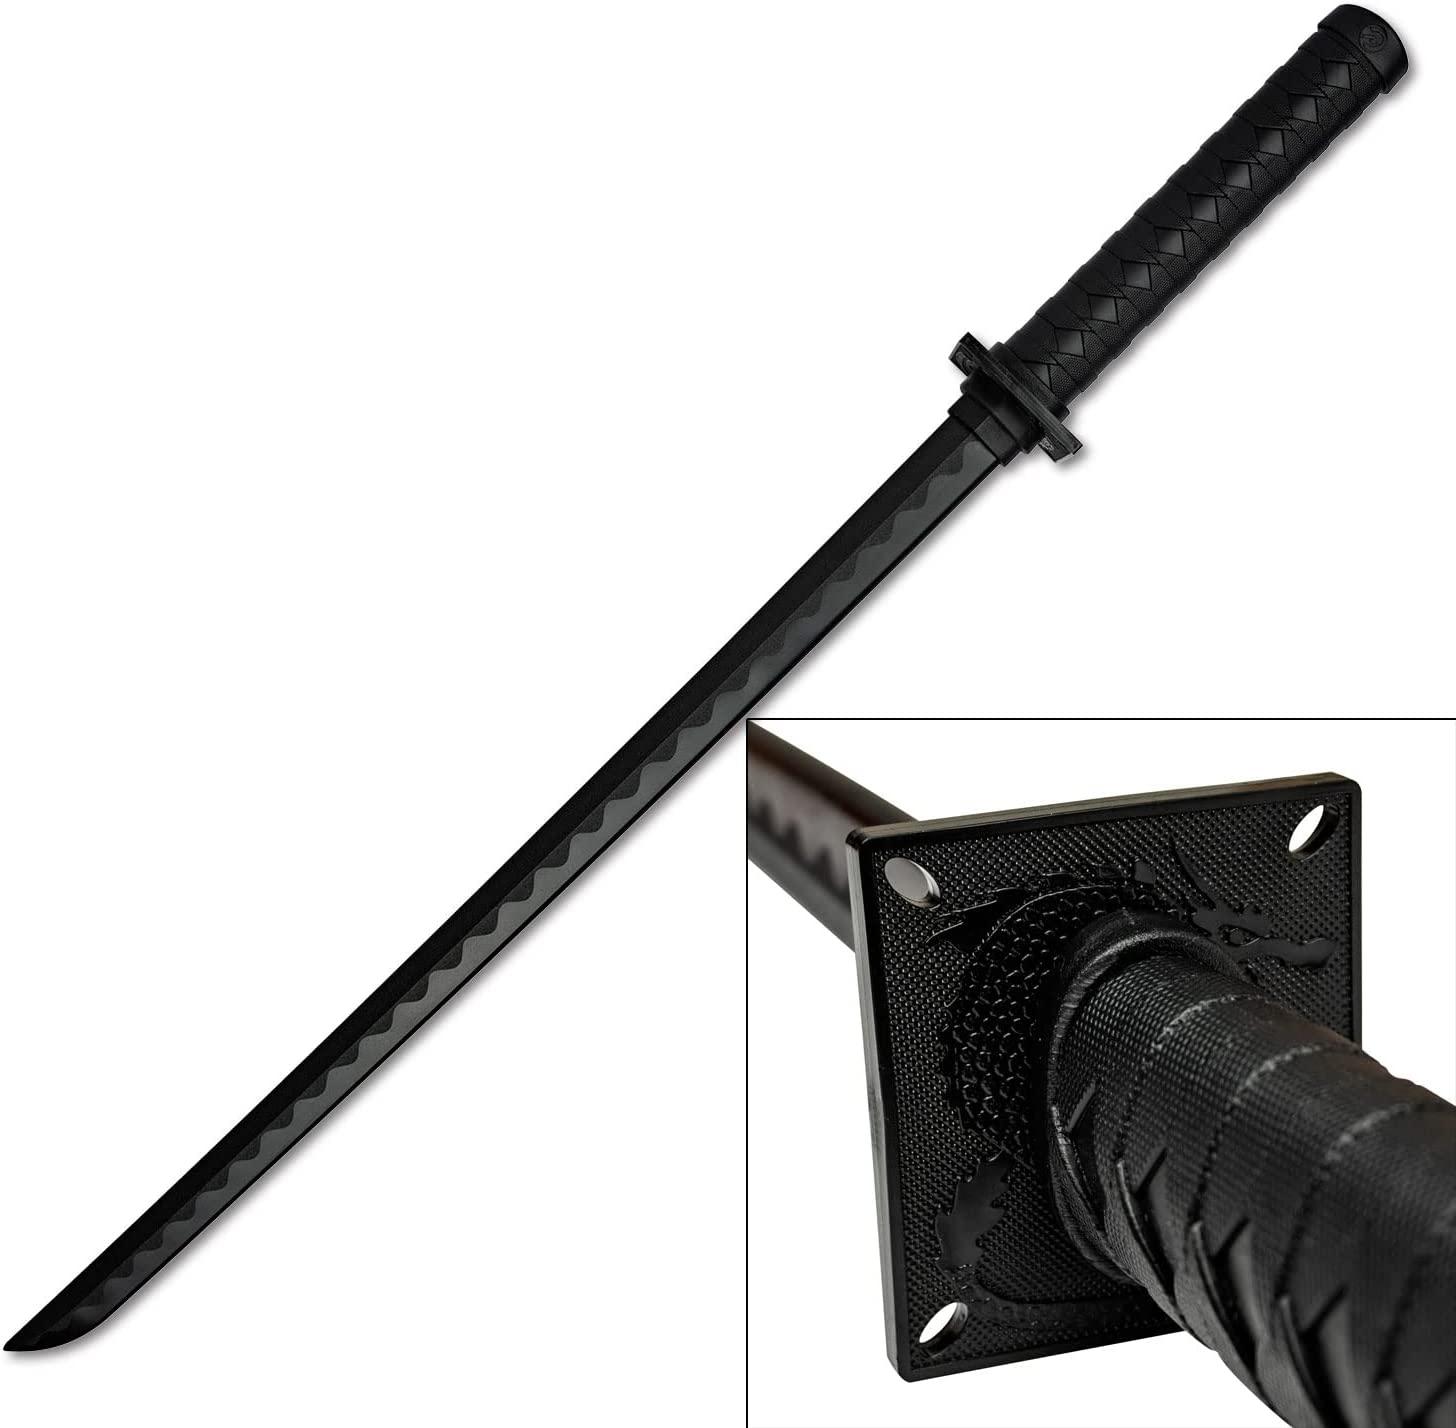 BladesUSA 1801PP Martial Art Polypropylene Ninja Sword for $8.99